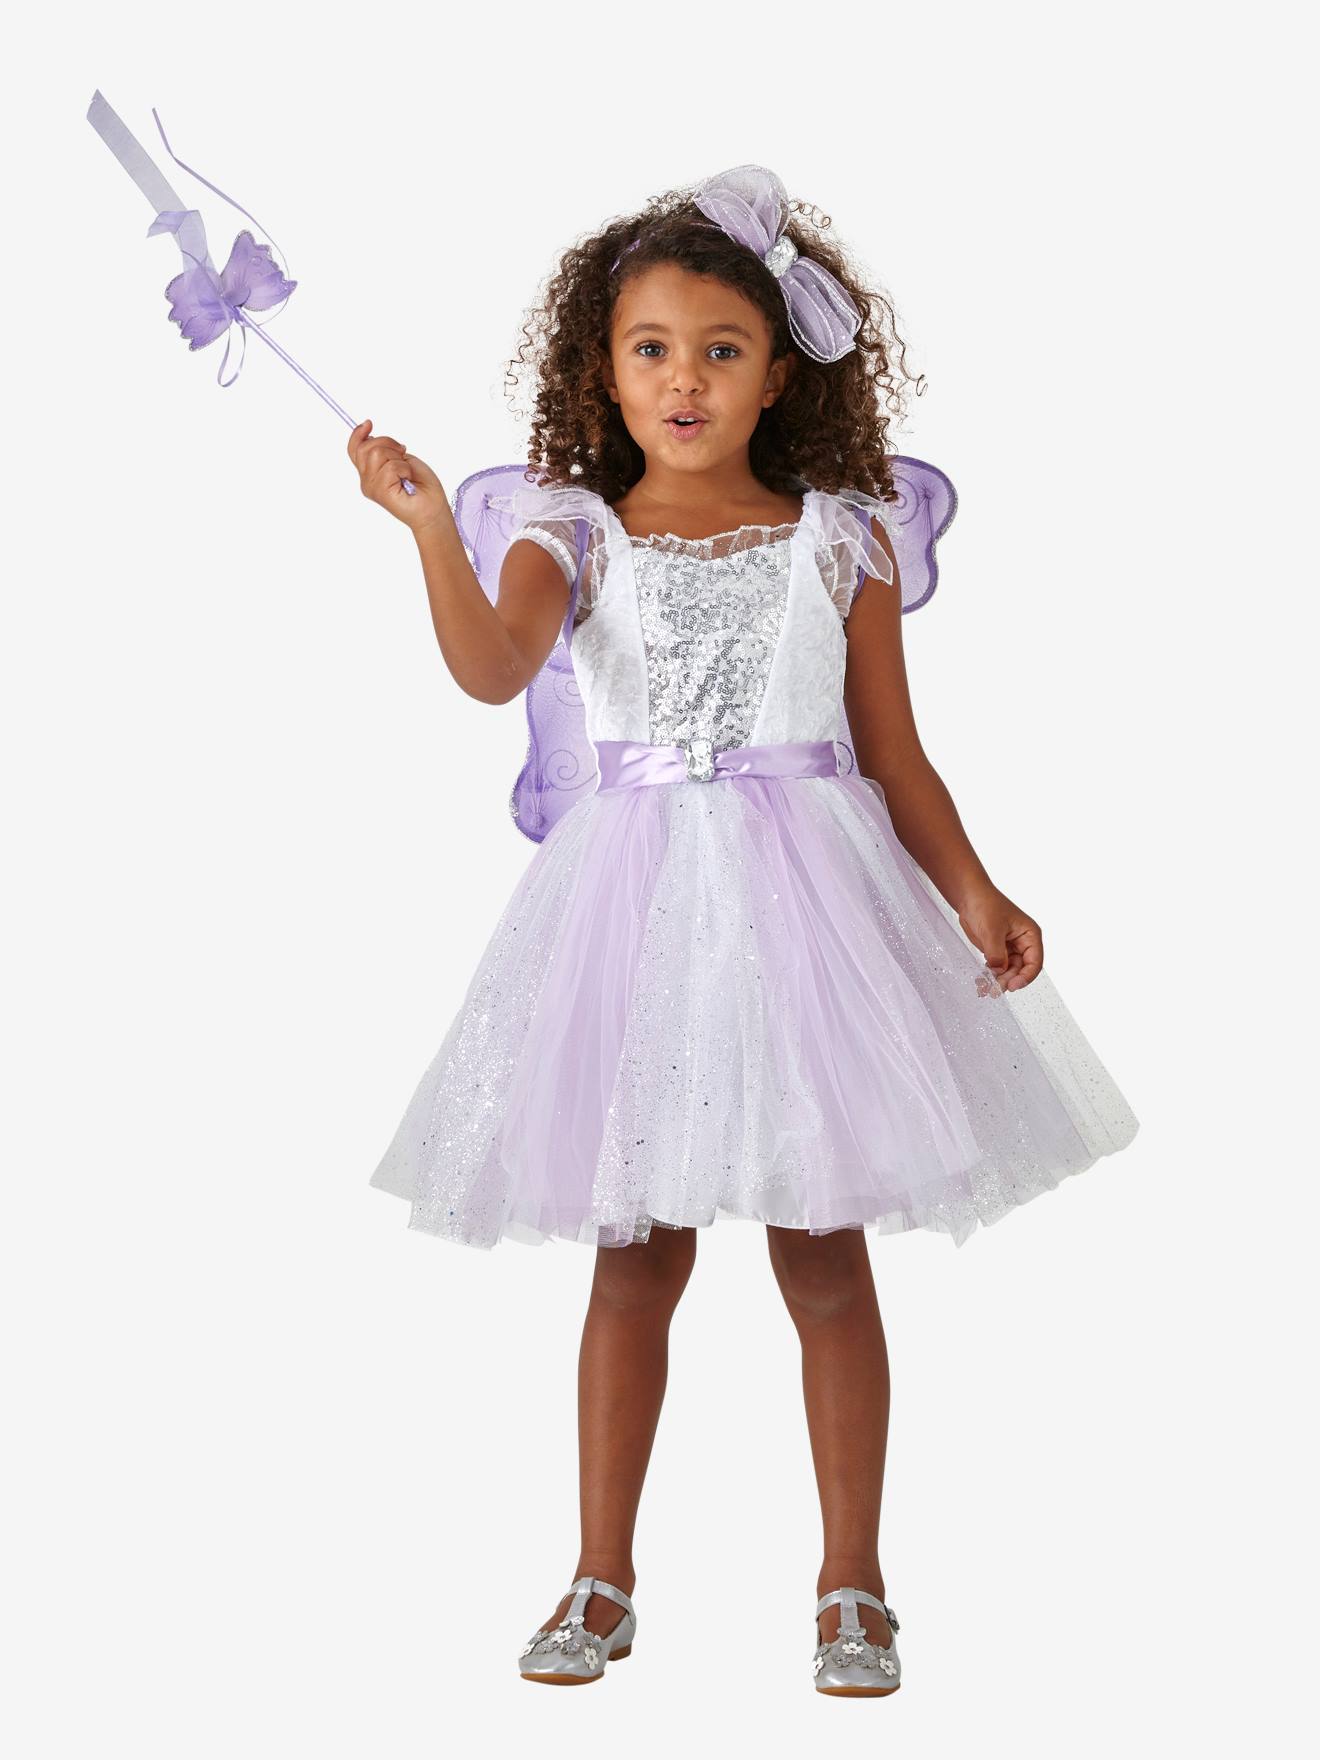 fairy costume girl